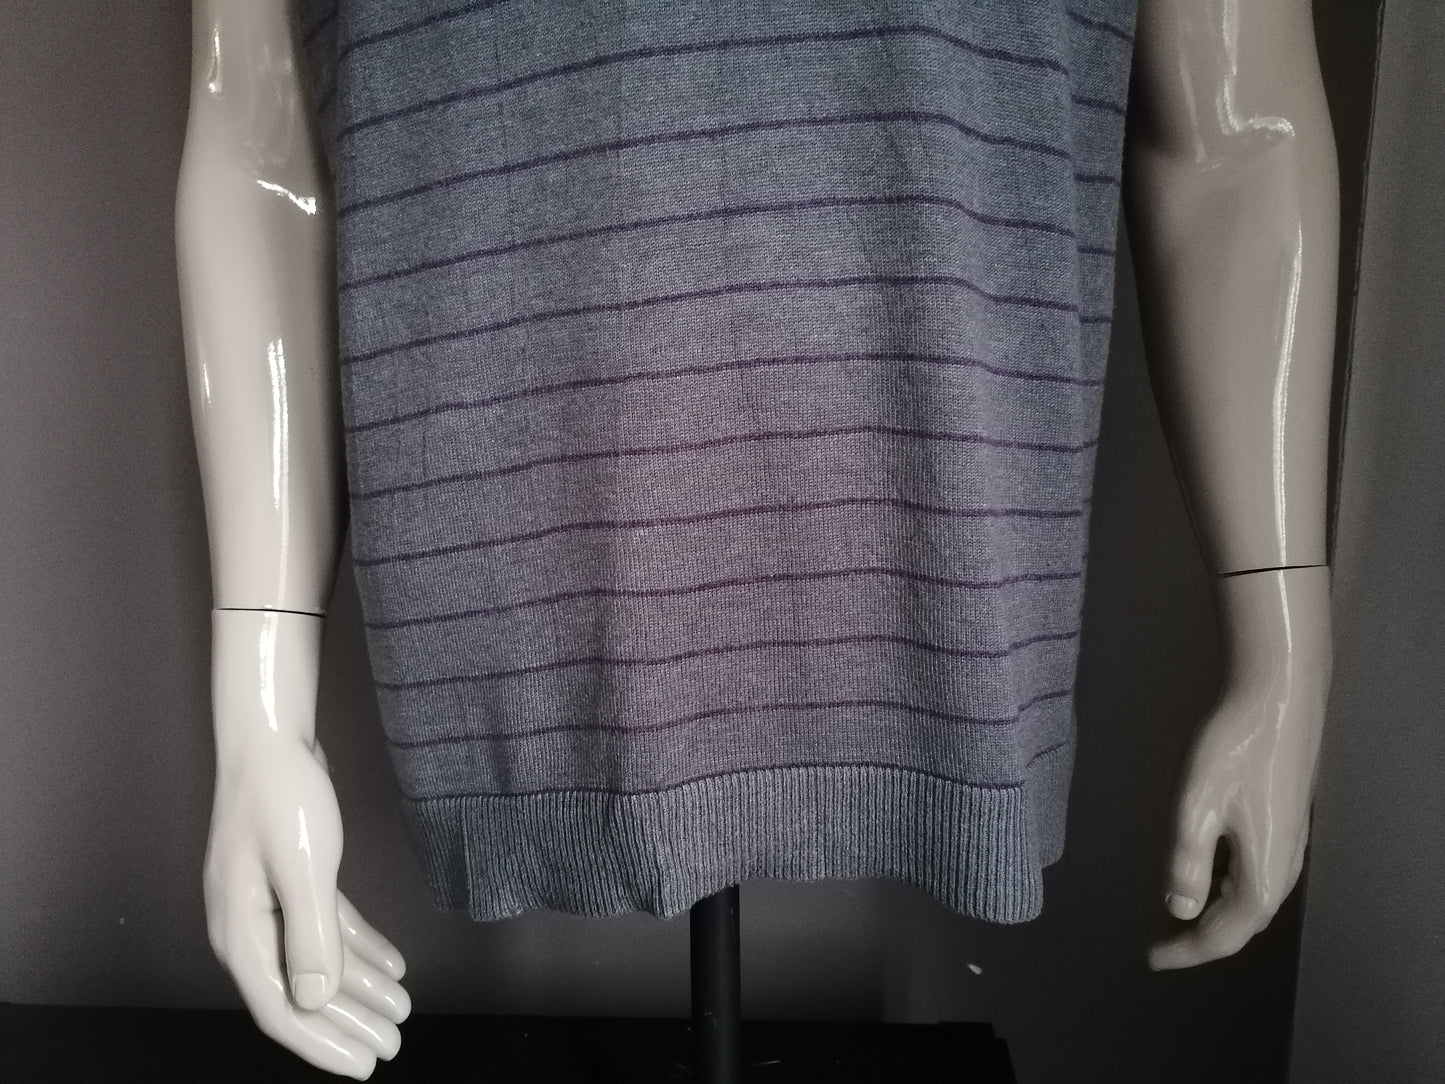 Mervins' Profile Spencer / Slip over. Gray purple striped. Size XL.